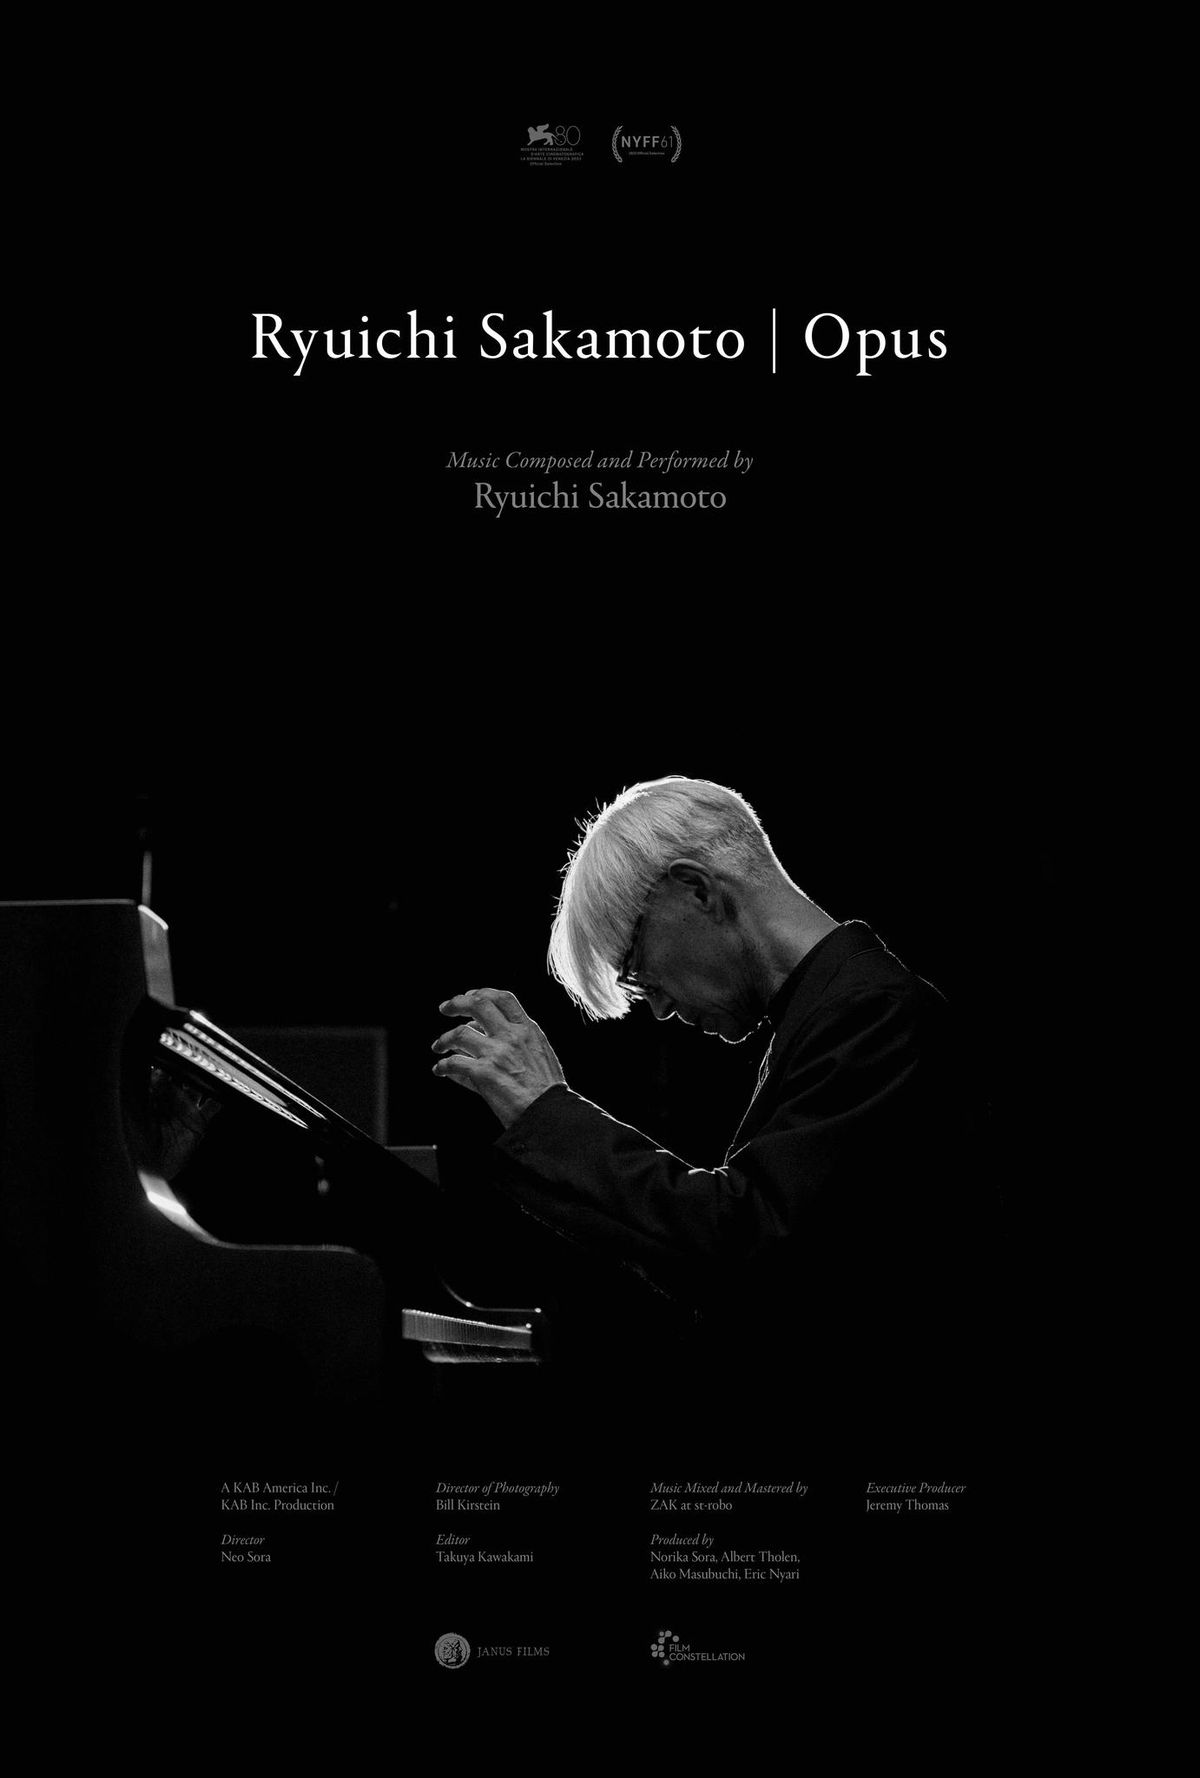 RYUICHI SAKAMOTO | OPUS (Screening at 7:30pm)